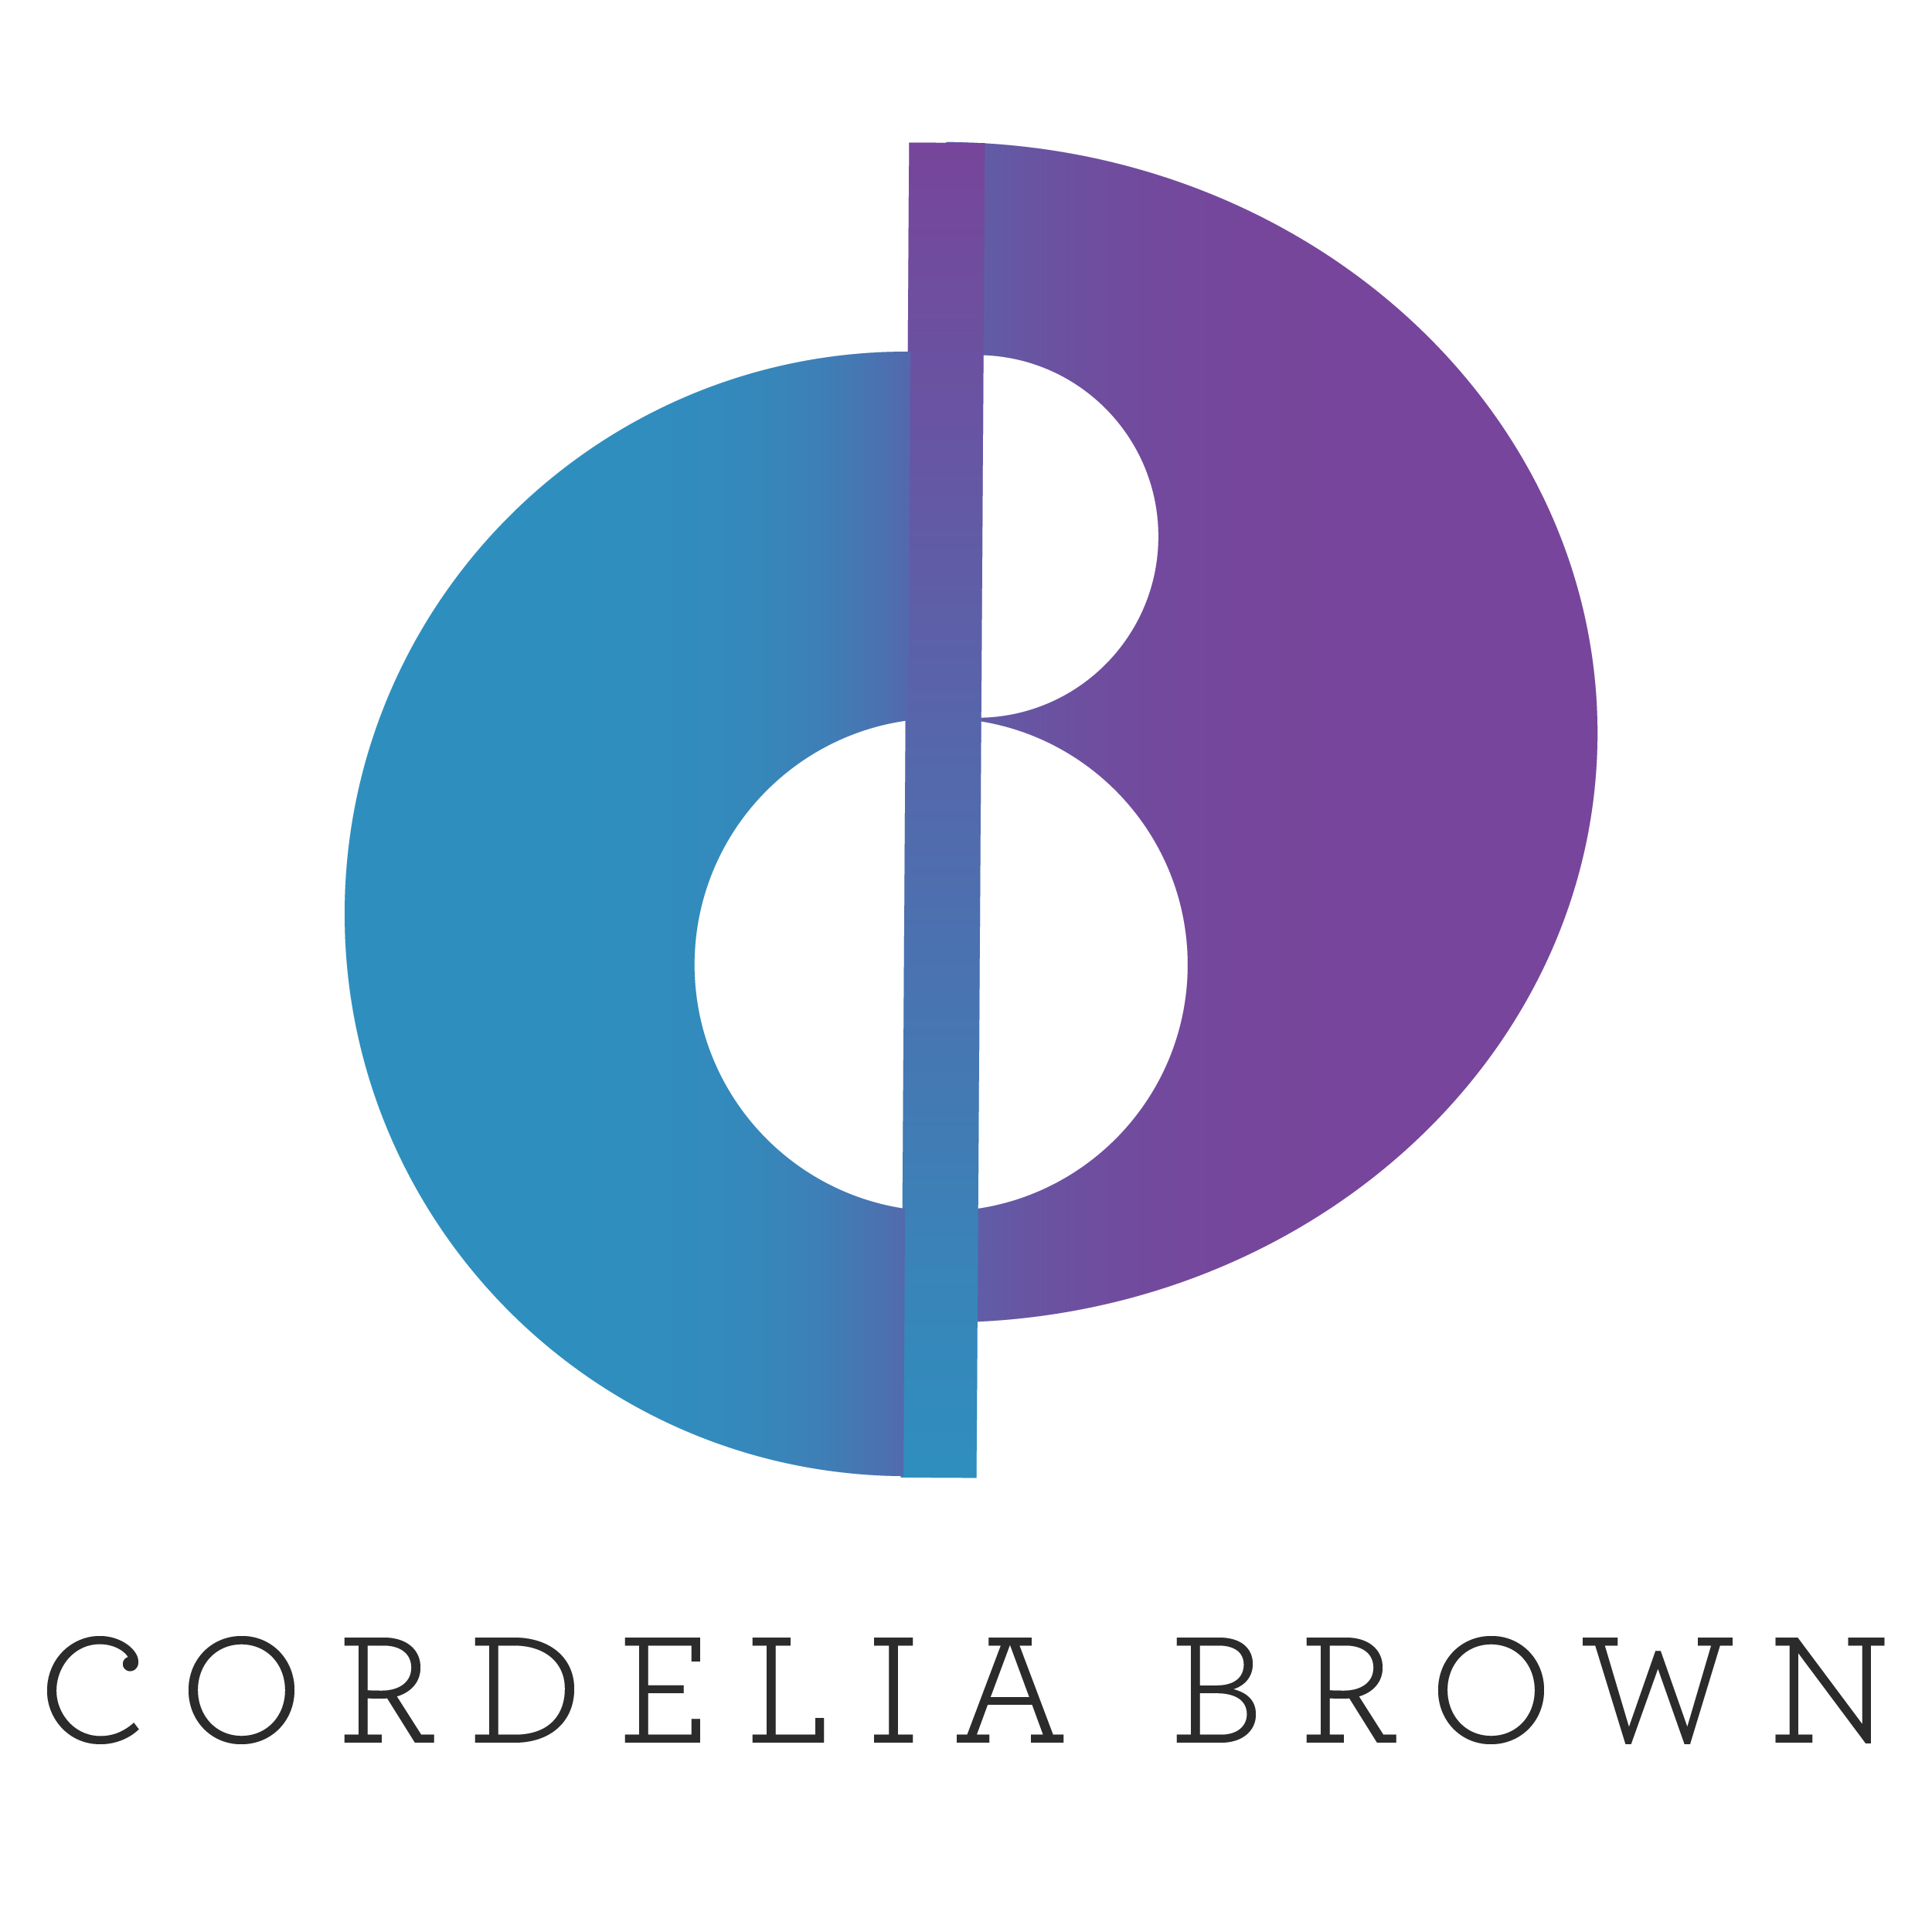 CORDELIA BROWN